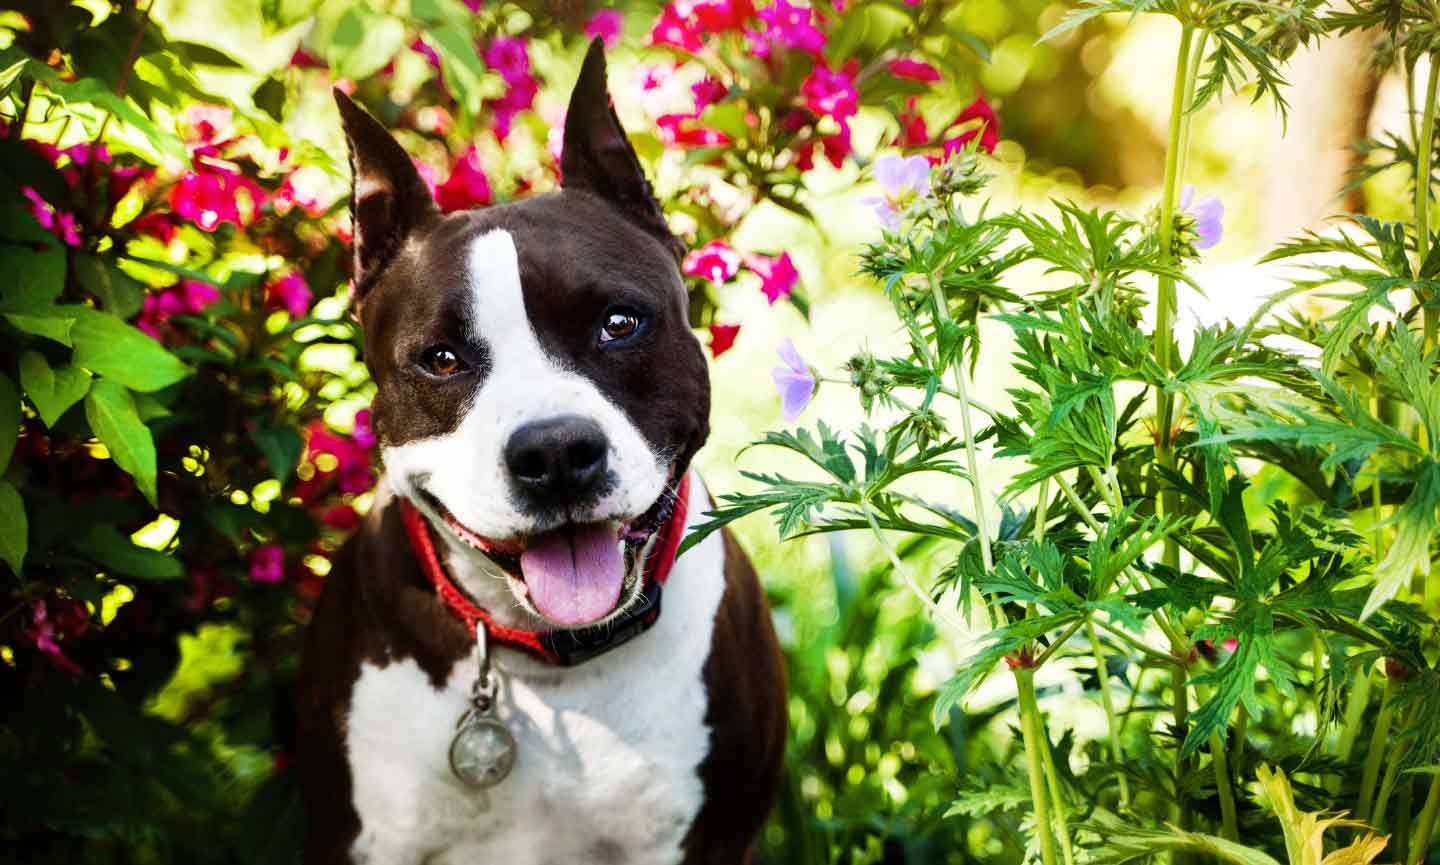 An American Staffordshire Terrier in a garden